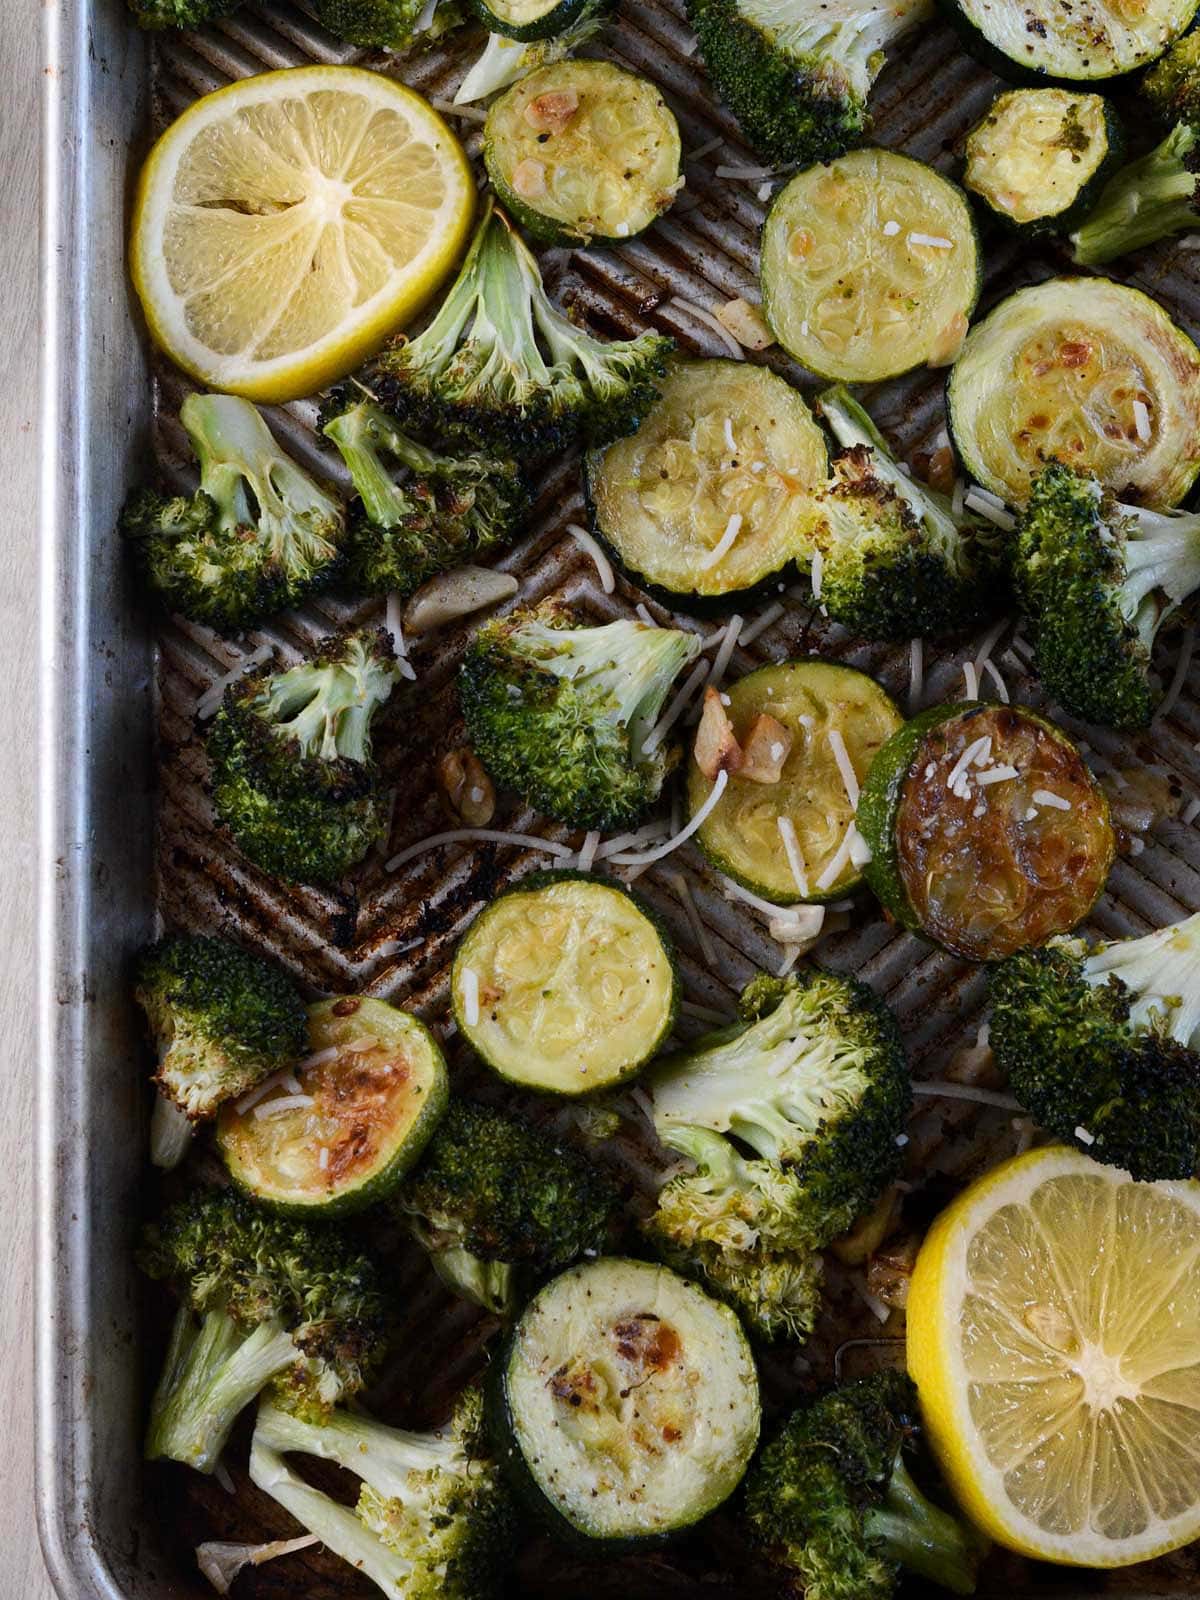 Roasted Broccoli & Zucchini with Lemon & Garlic - Naturally Plant Based